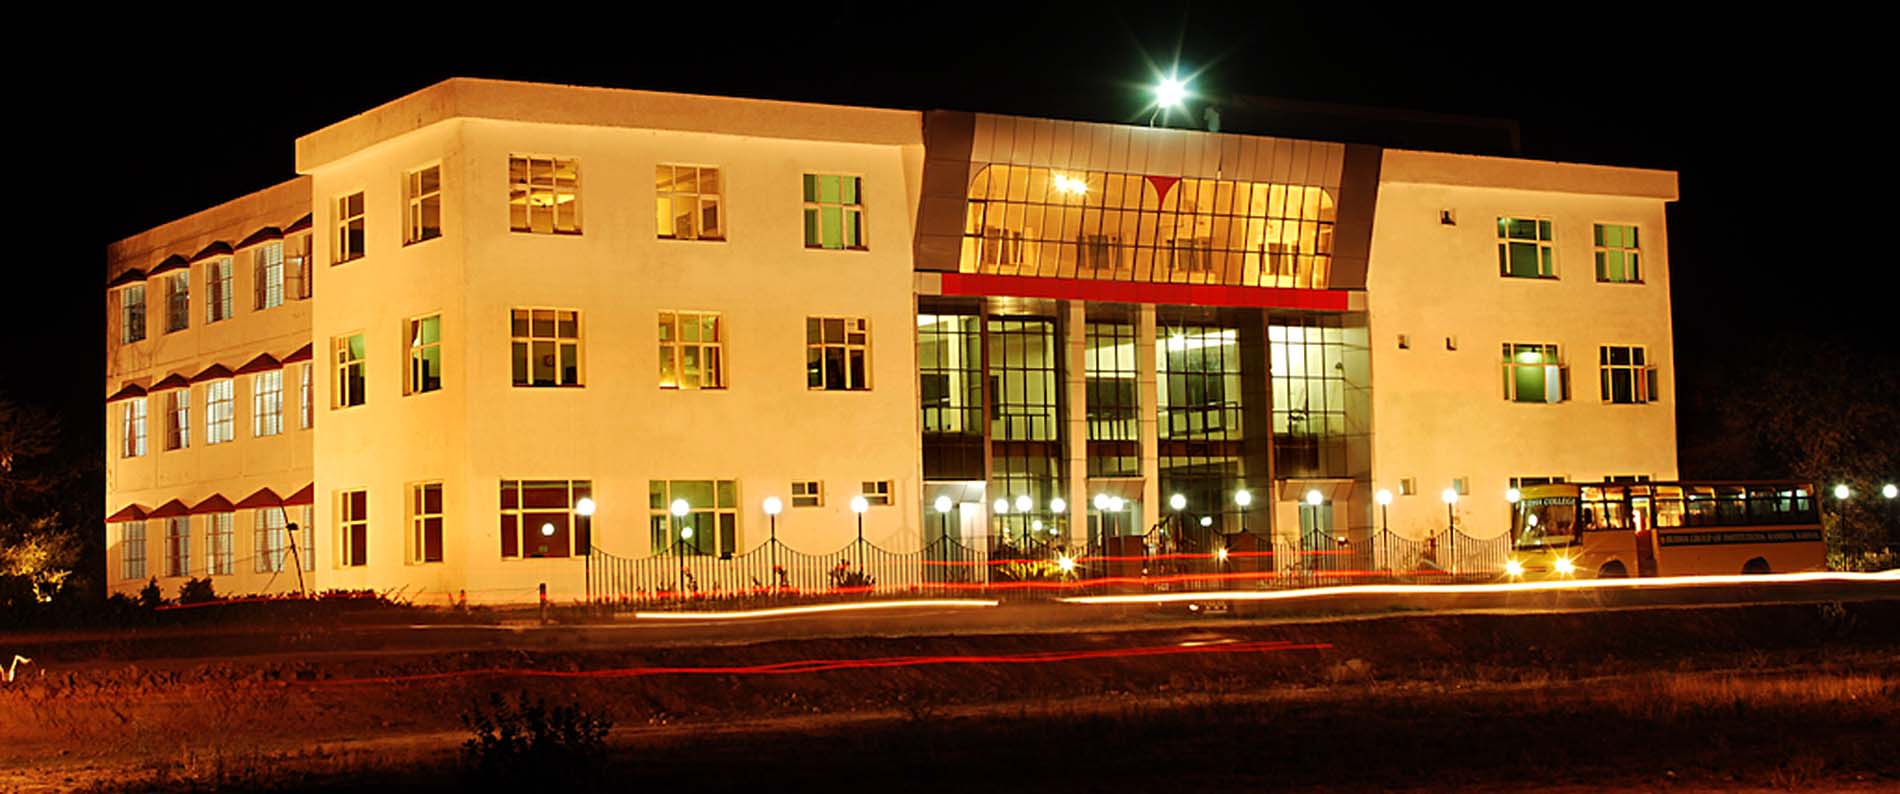 Budha College of Higher Education, Karnal Image